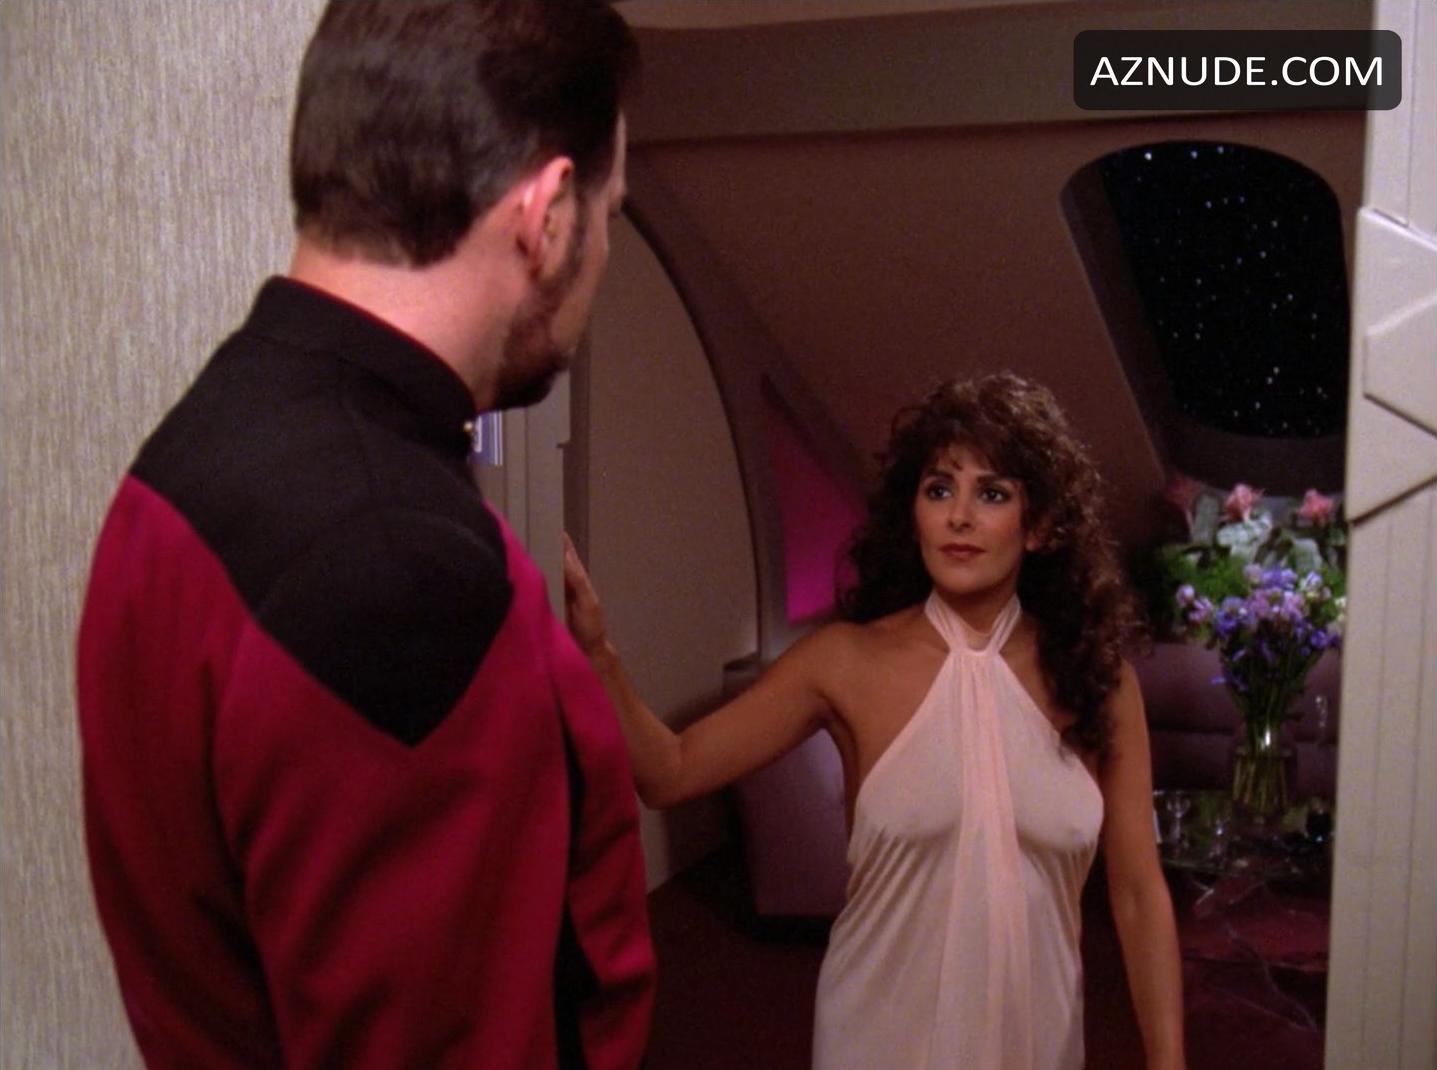 Star Trek Deanna Troi Lesbian Porn - STAR TREK: THE NEXT GENERATION NUDE SCENES - AZNude